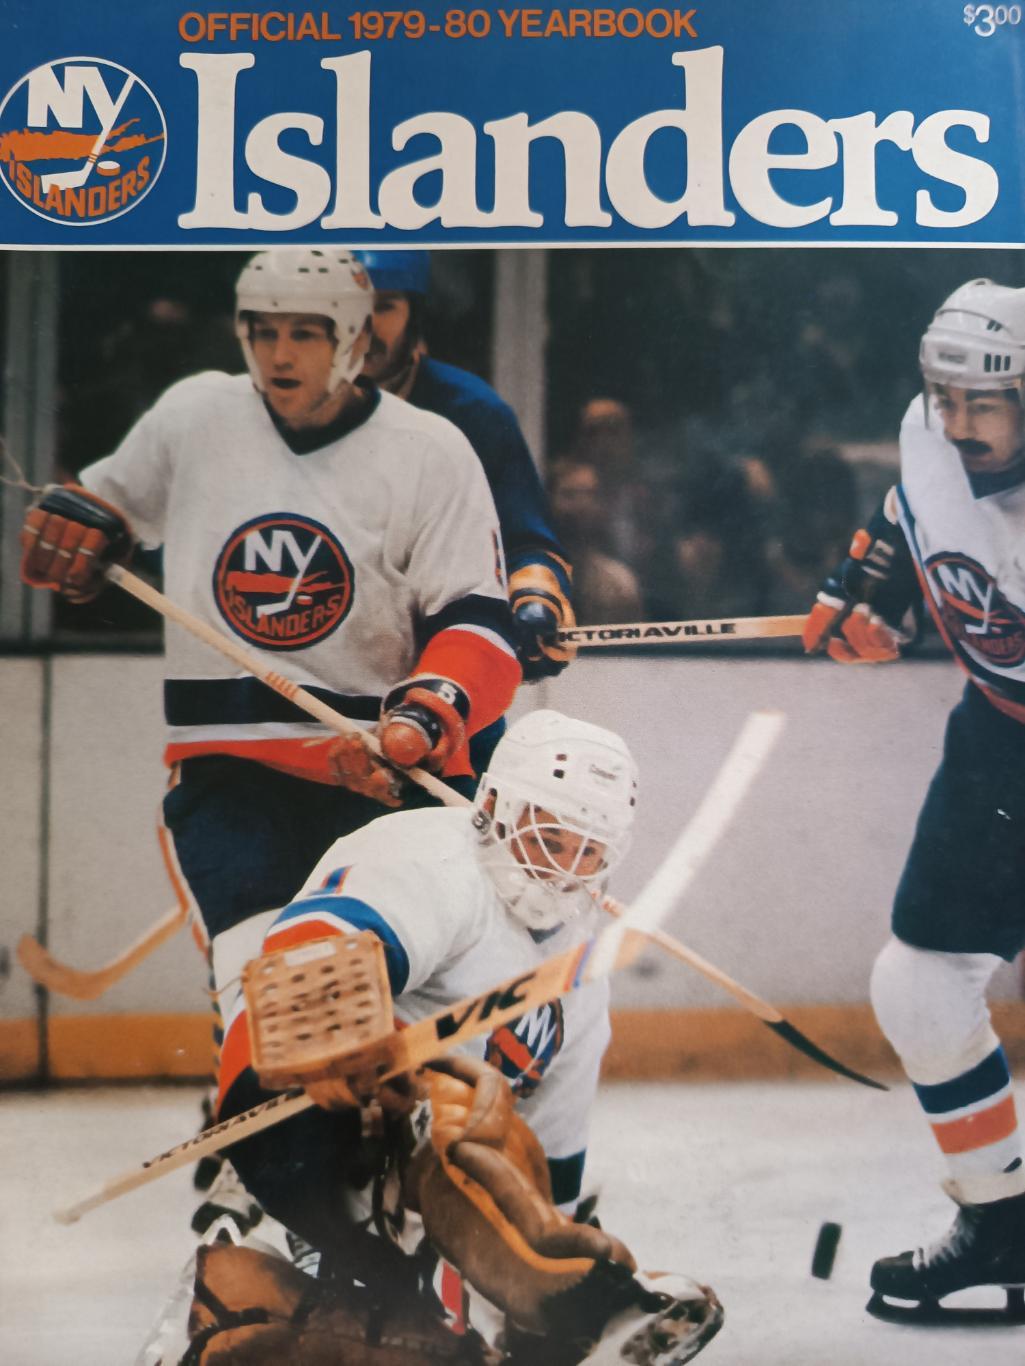 ХОККЕЙ СПРАВОЧНИК ЕЖЕГОДНИК НХЛ АЙЛЕНДЕРС 1979-80 NHL NY ISLANDERS YEARBOOK